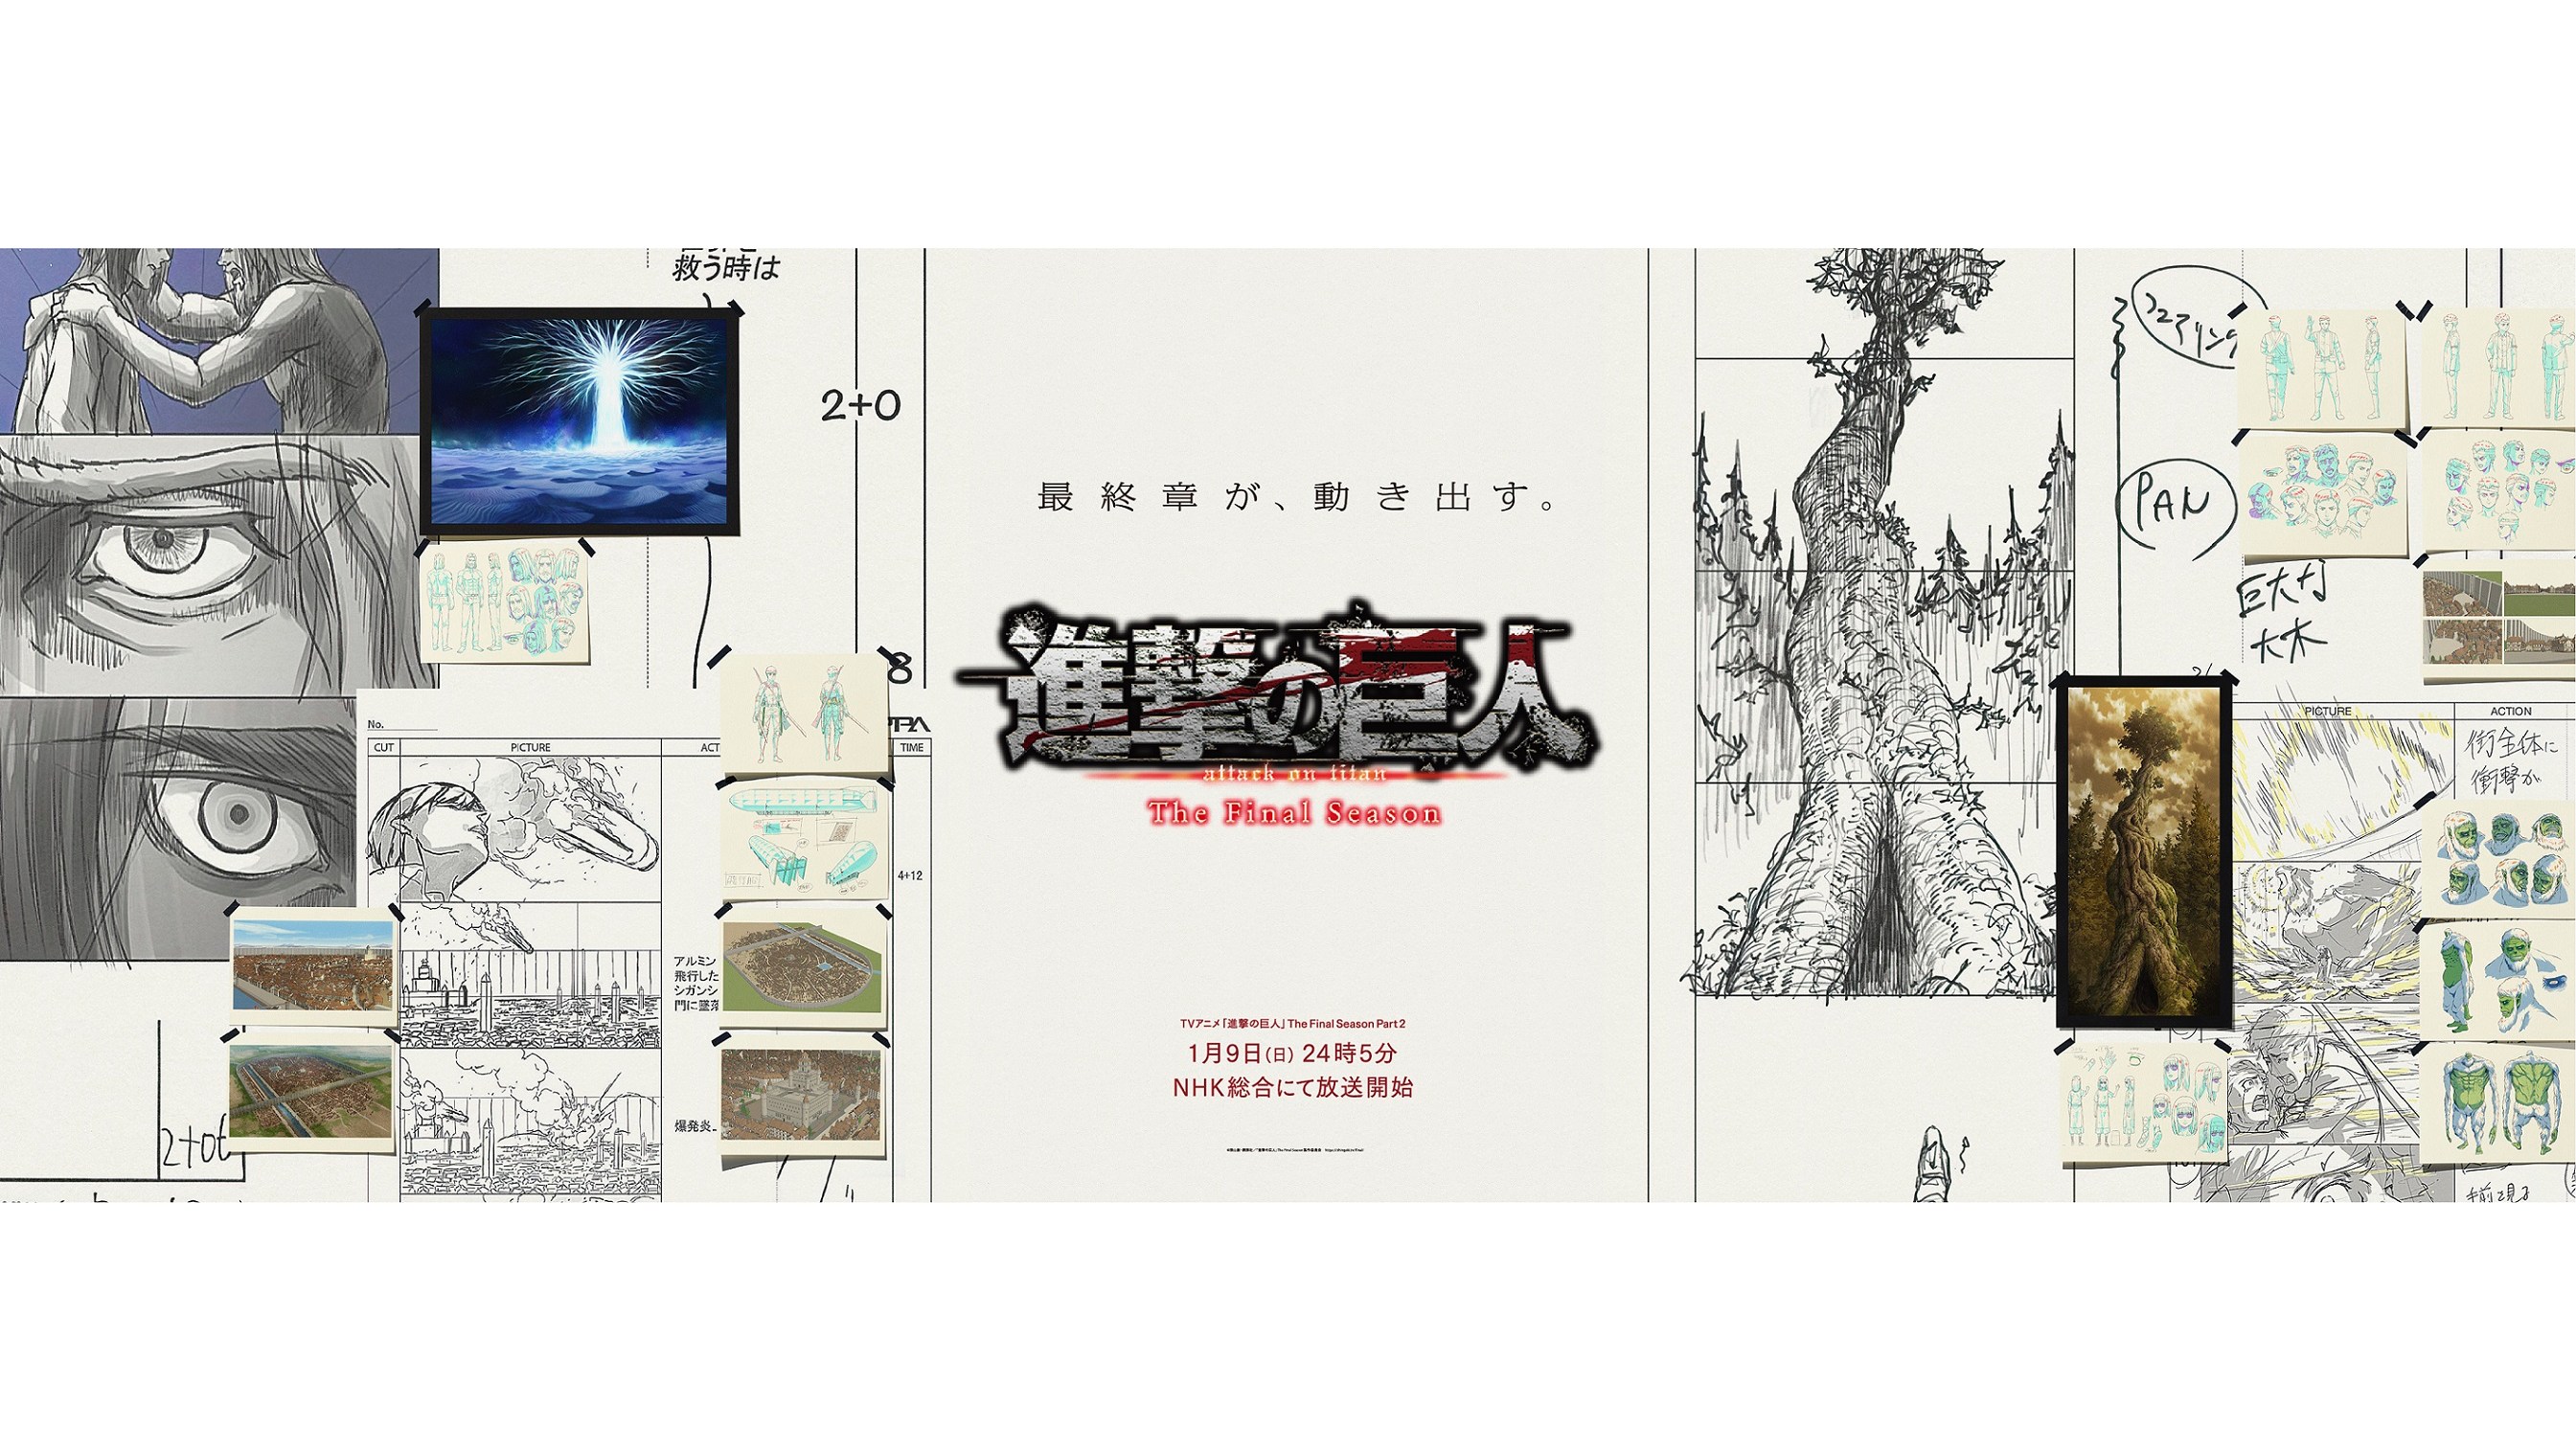 2022 NEW Shingeki no Kyojin The Final Season Part 2 Japanese Classic Anime  Attack on Titan Poster Room Decor Art Wall Stickers